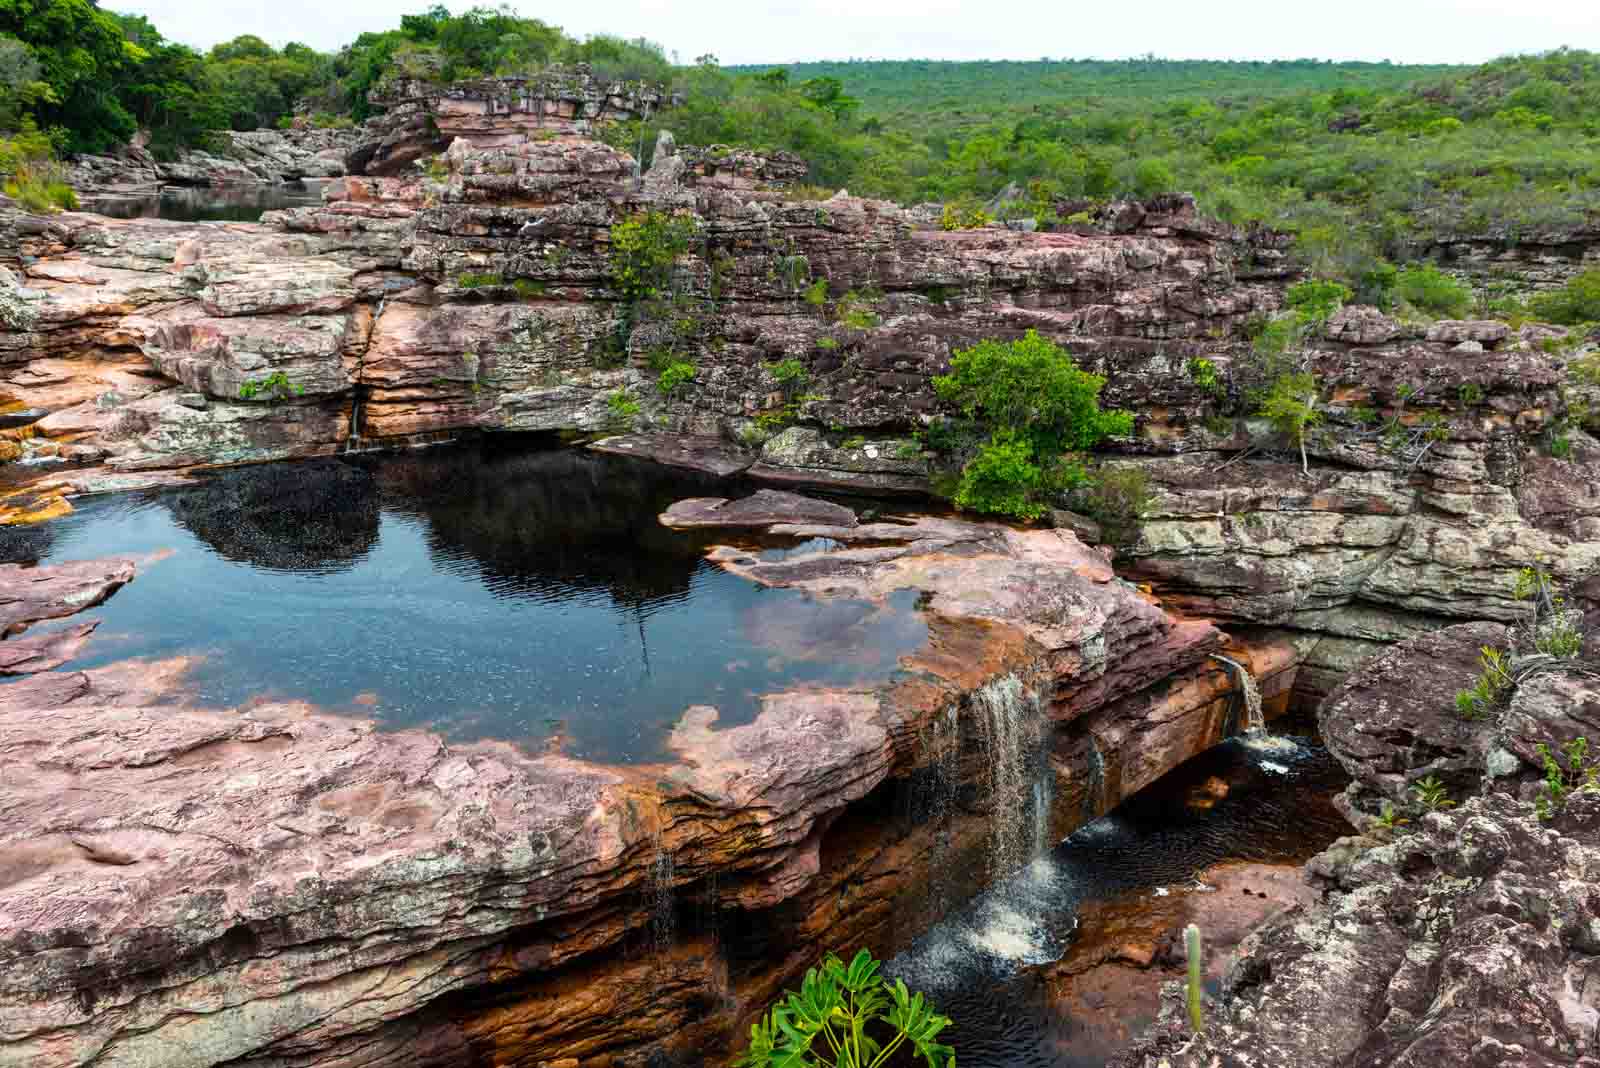 Cerrado Protected Areas | Brazil